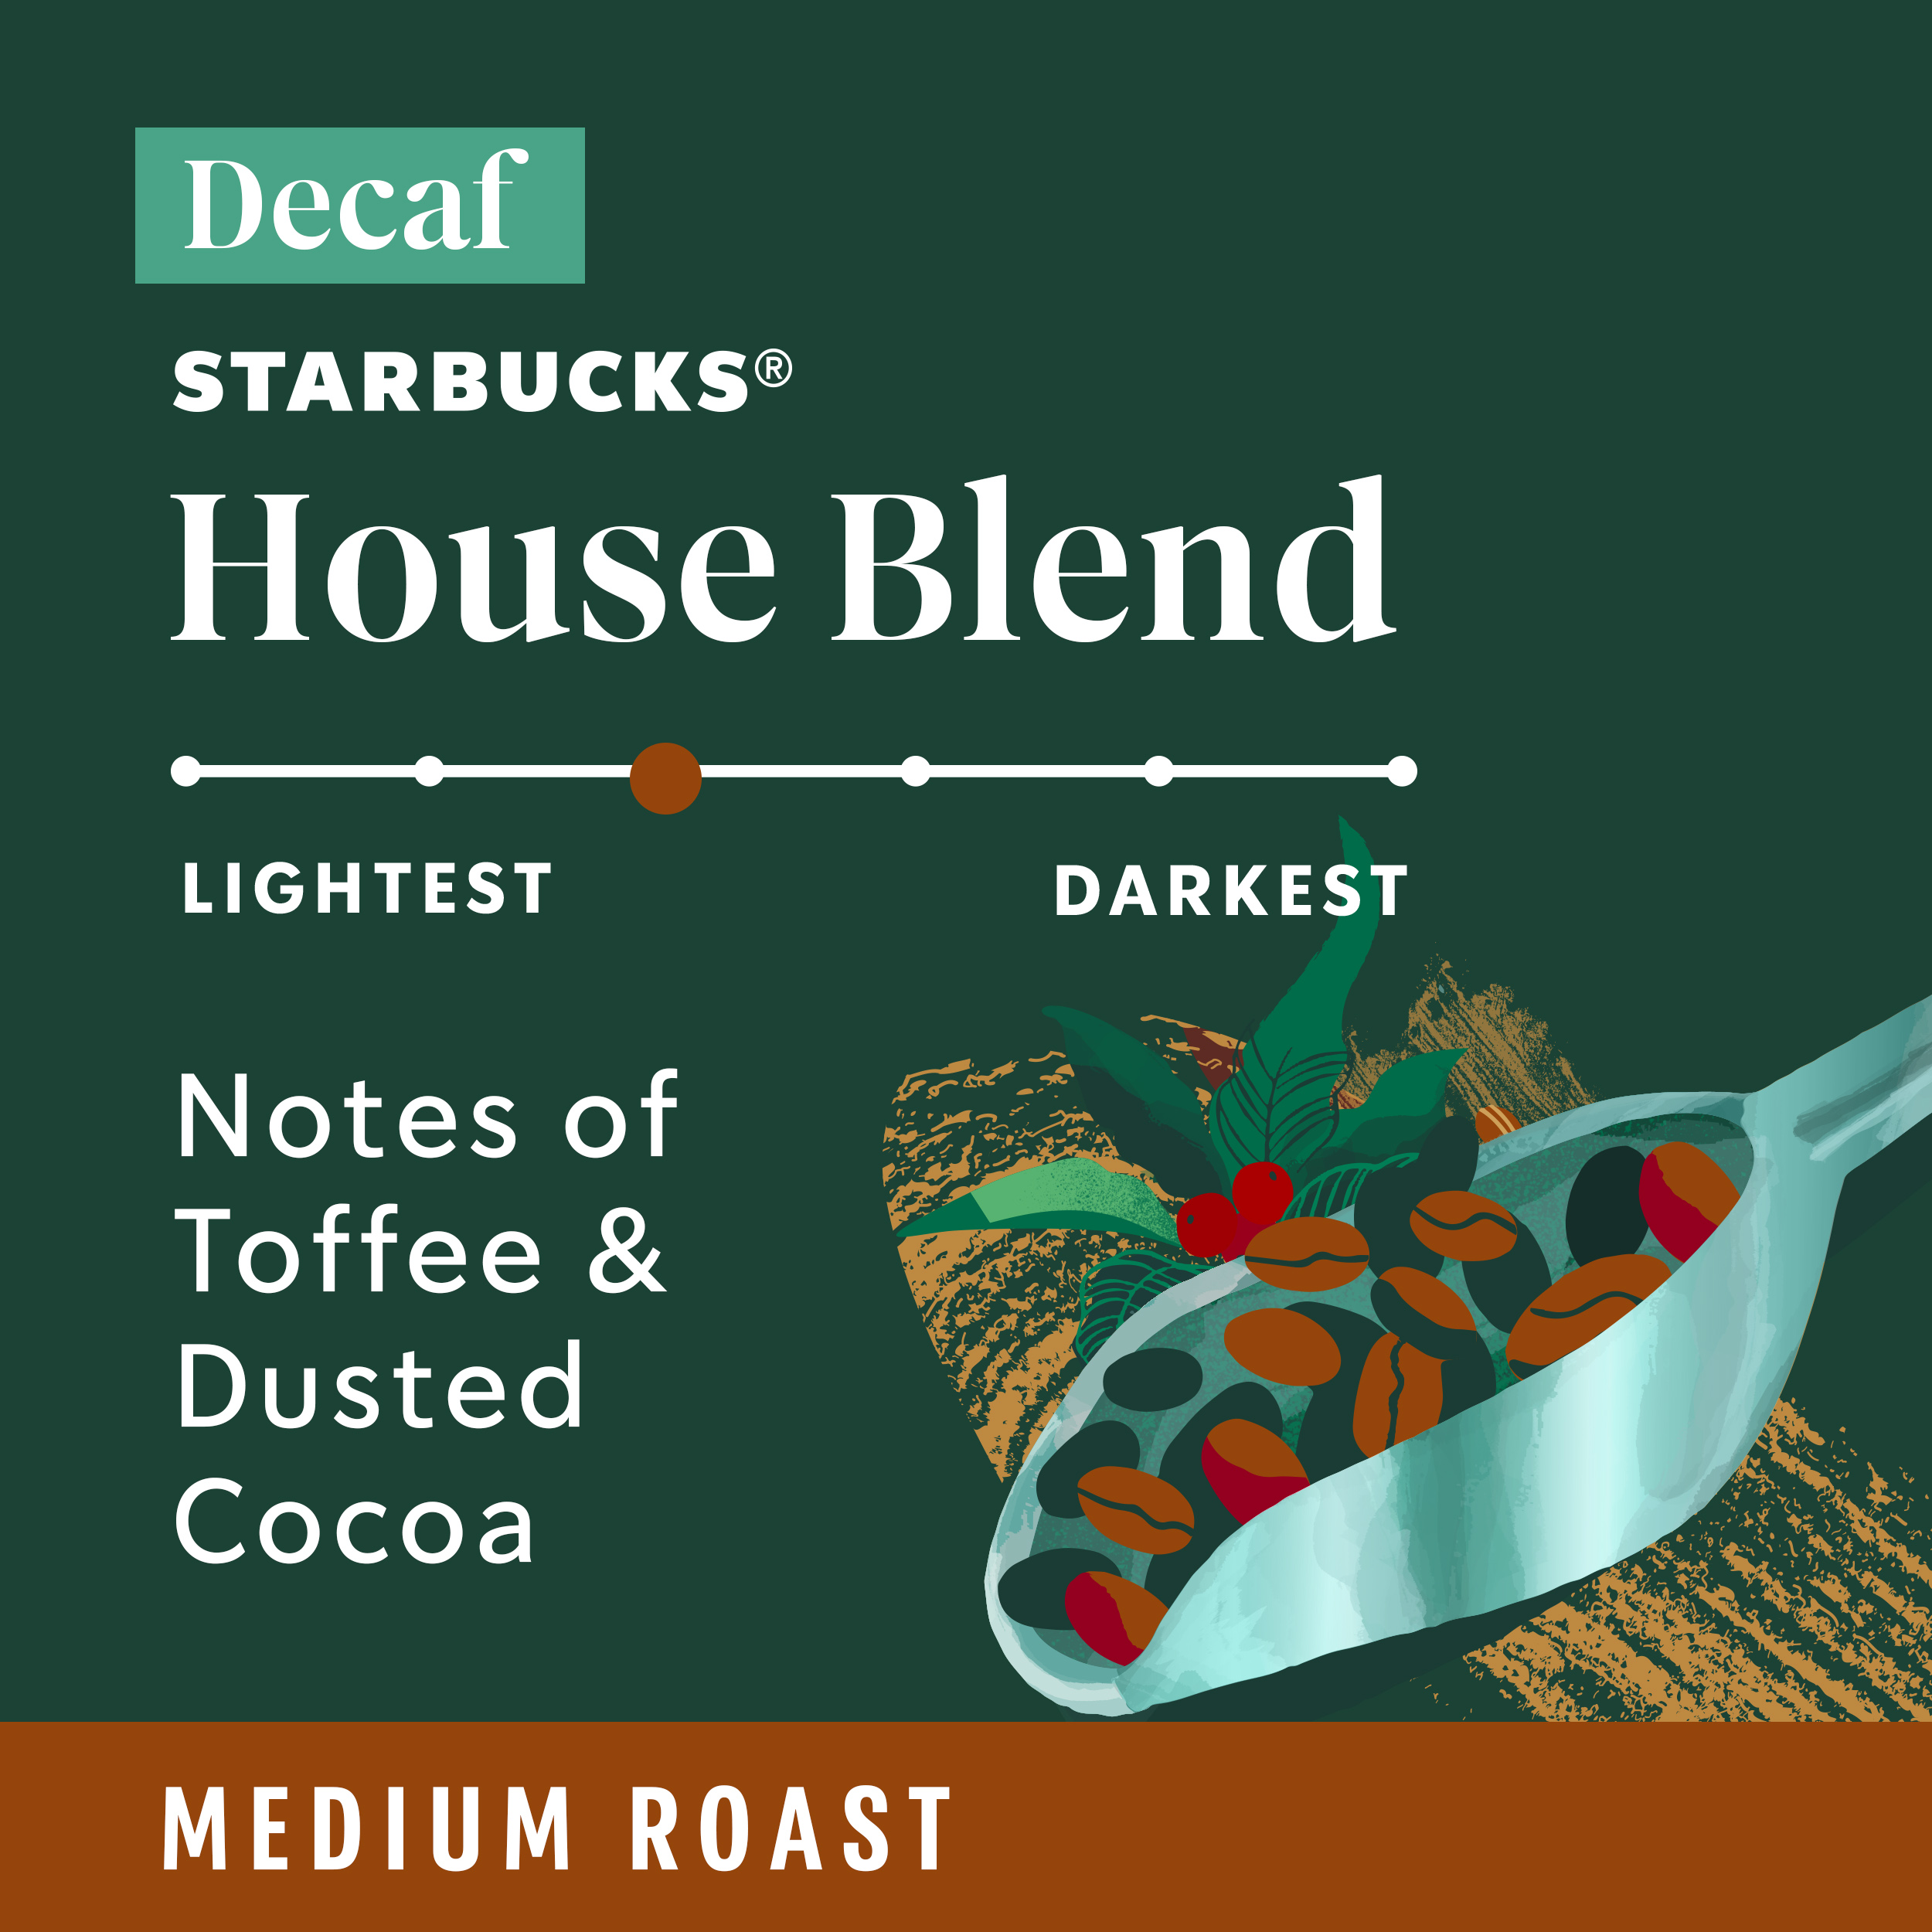 Starbucks Arabica Beans Decaf House Blend, Medium Roast, Ground Coffee, 12 oz - image 3 of 8